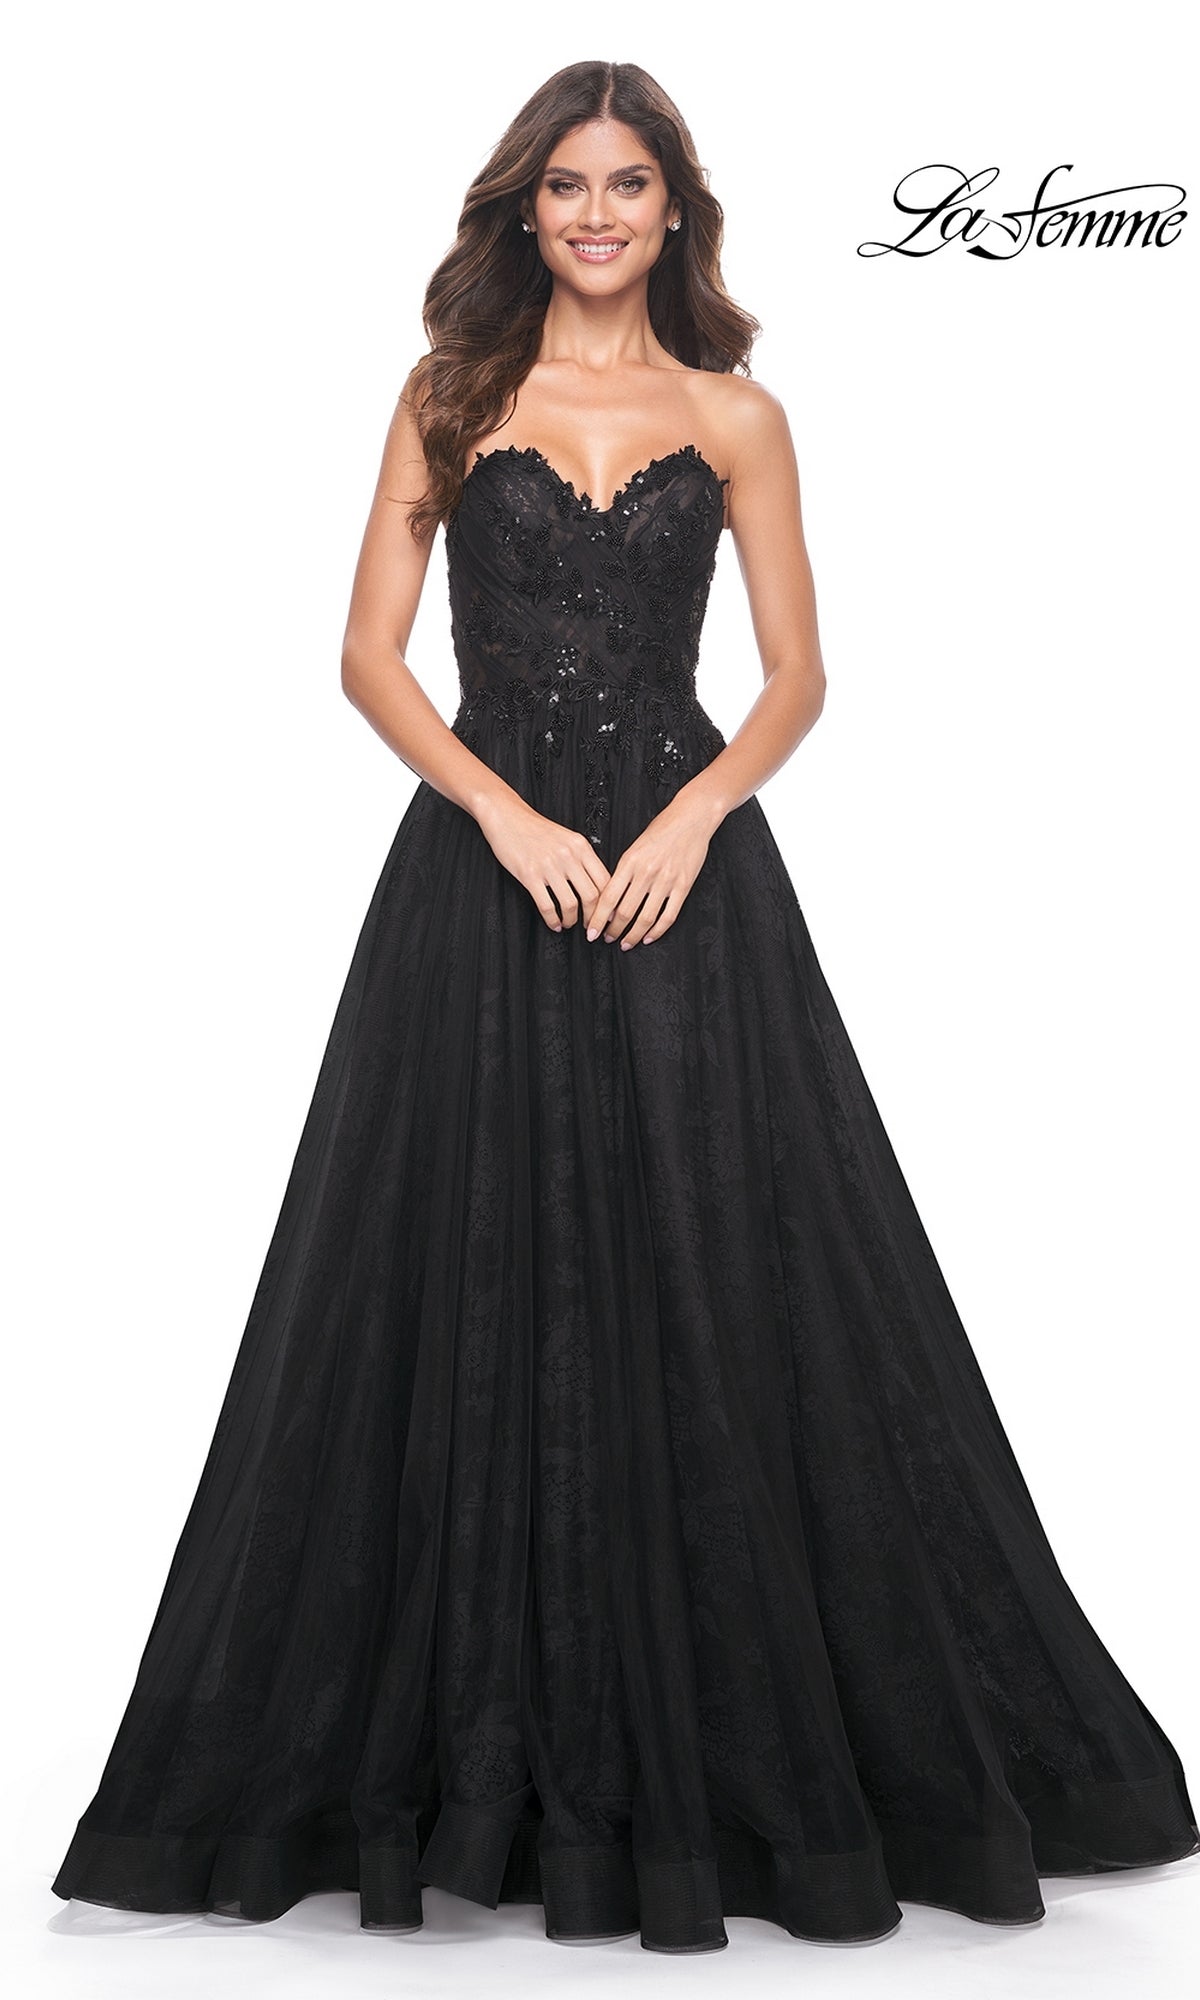  La Femme 31954 Formal Prom Dress